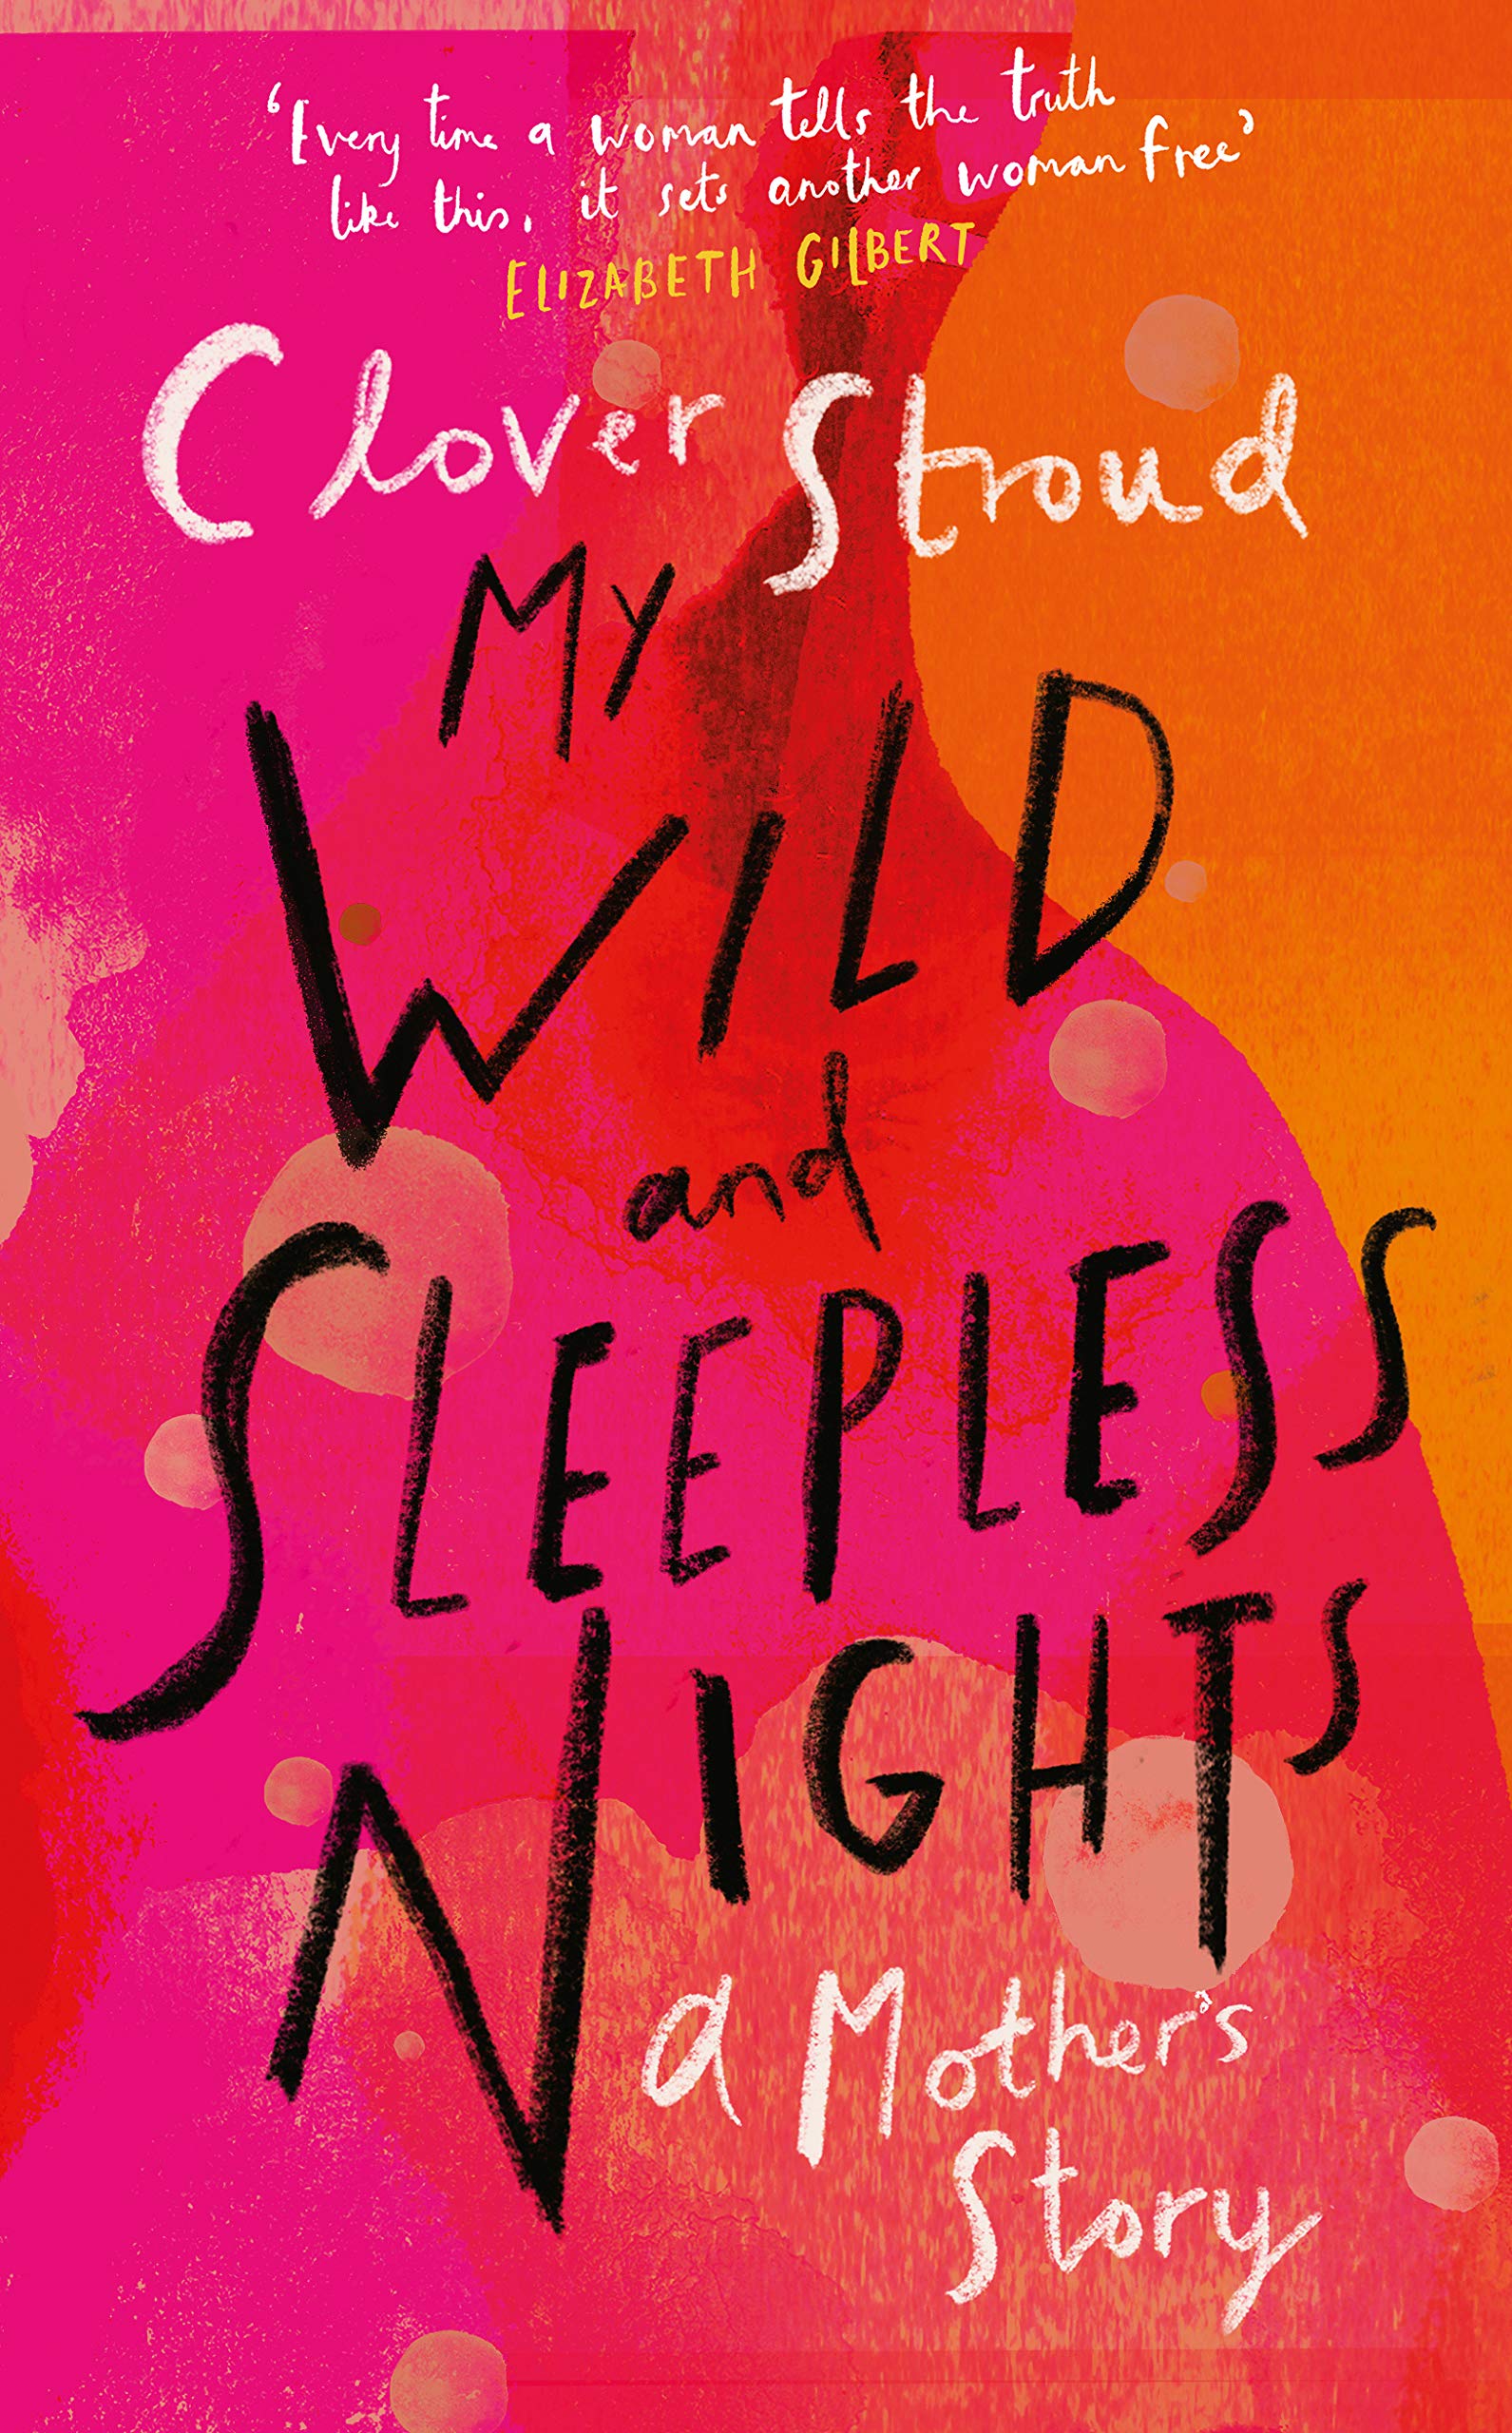 My Wild and Sleepless Night (Amazon)